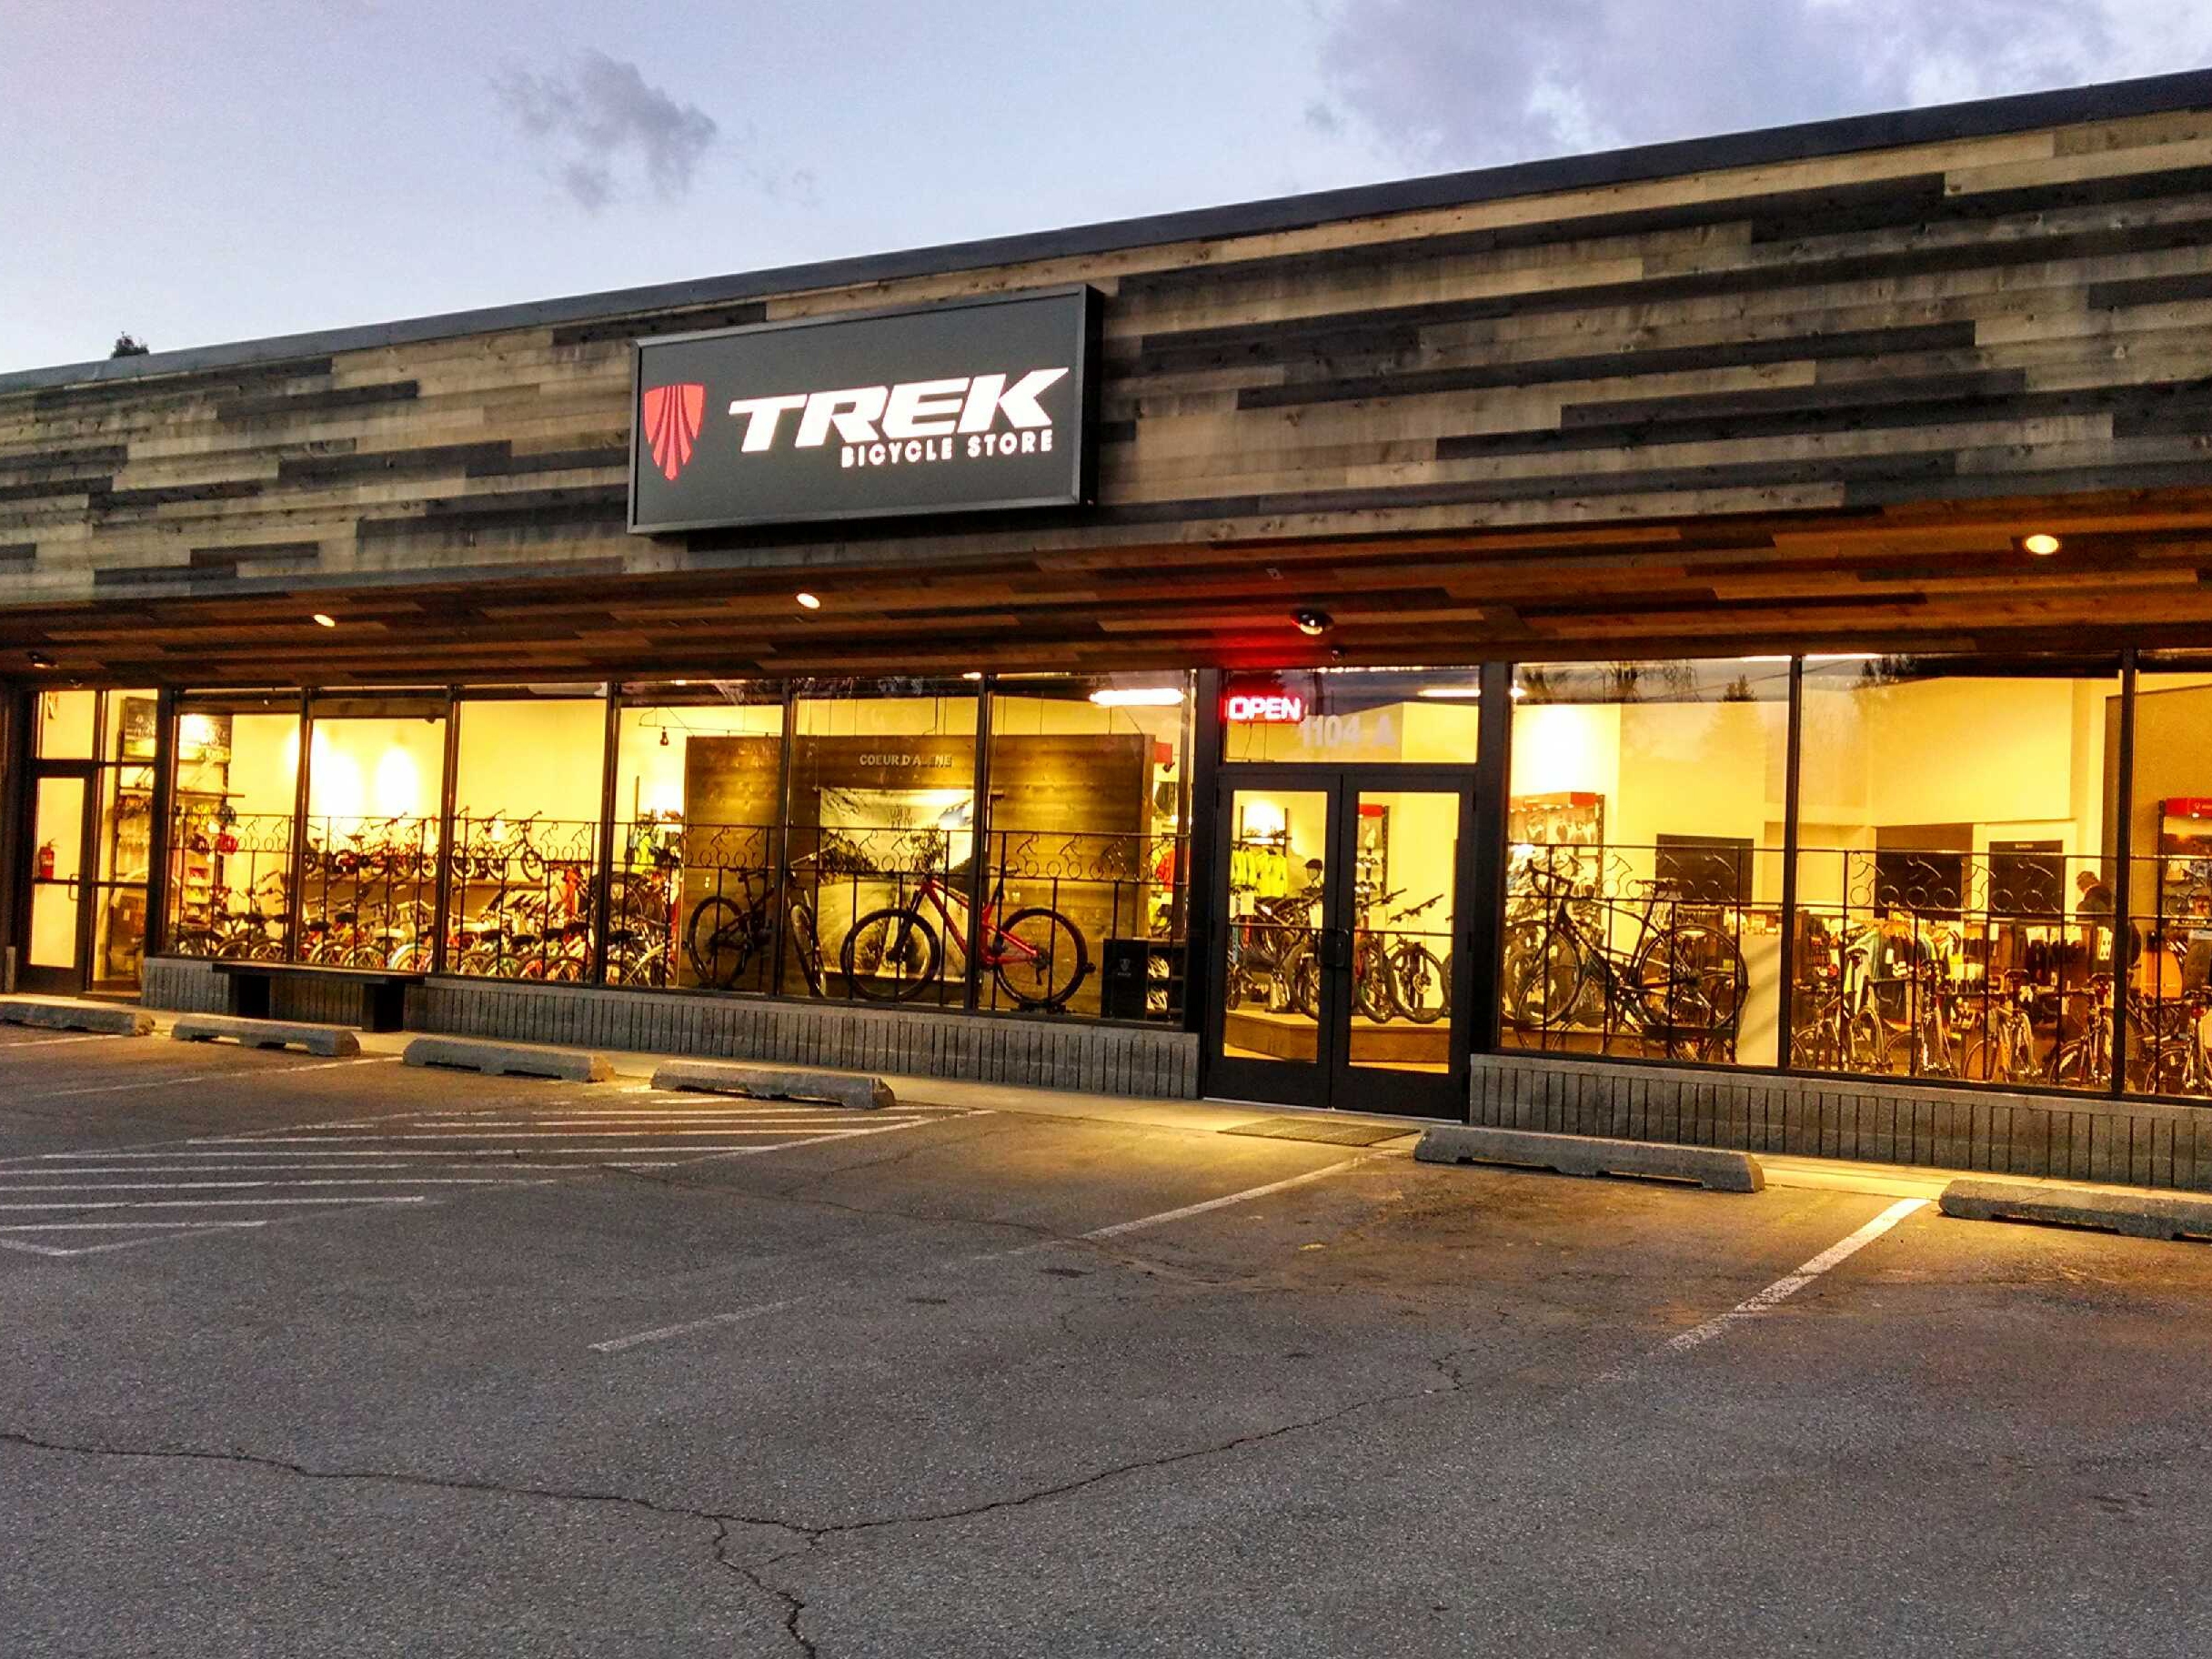 trek bicycle store